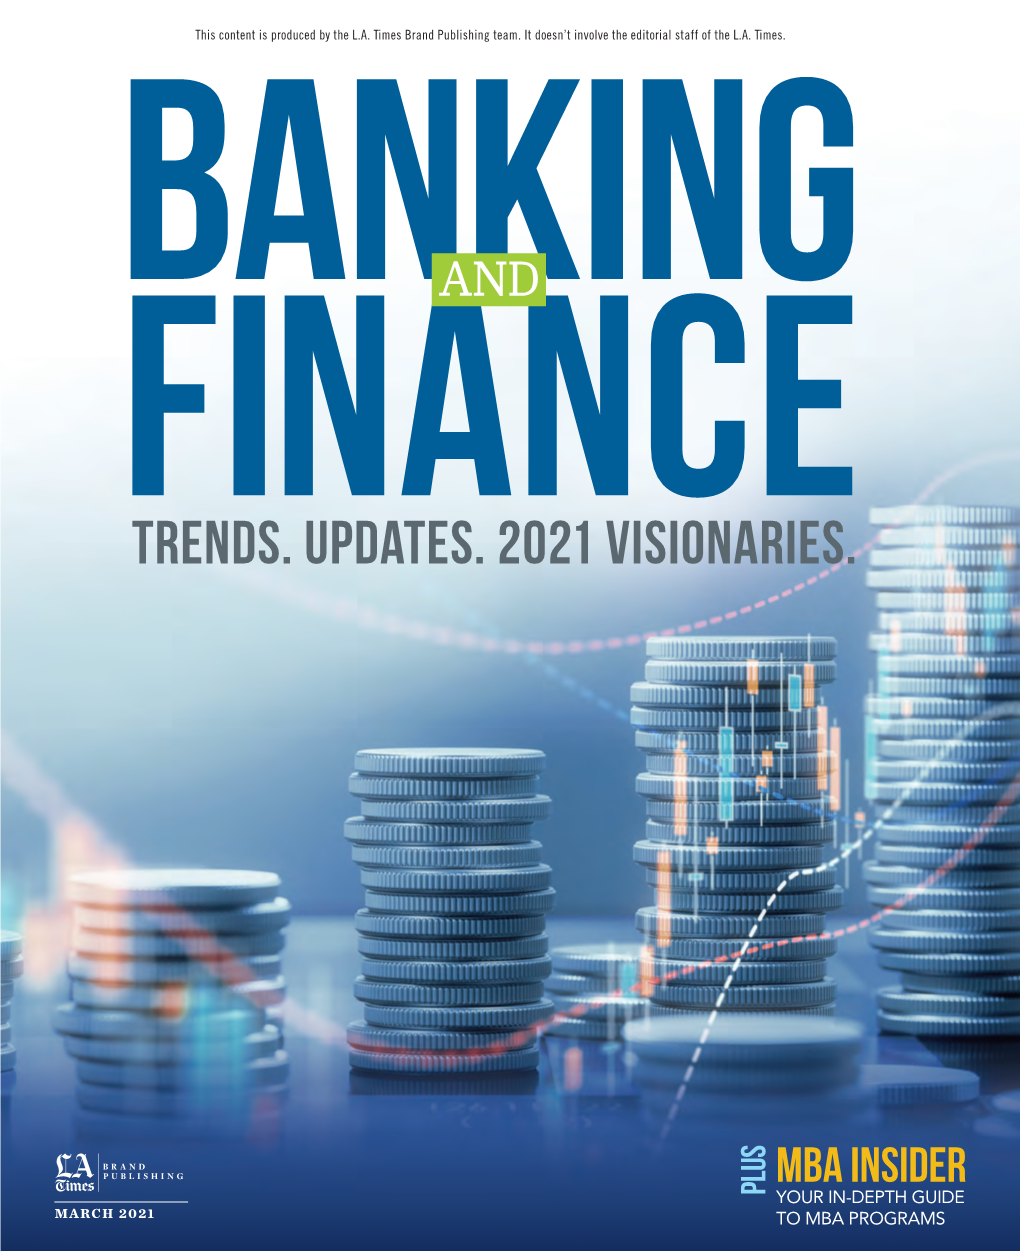 BANKING FINANCE Trends. Updates. 2021 Visionaries